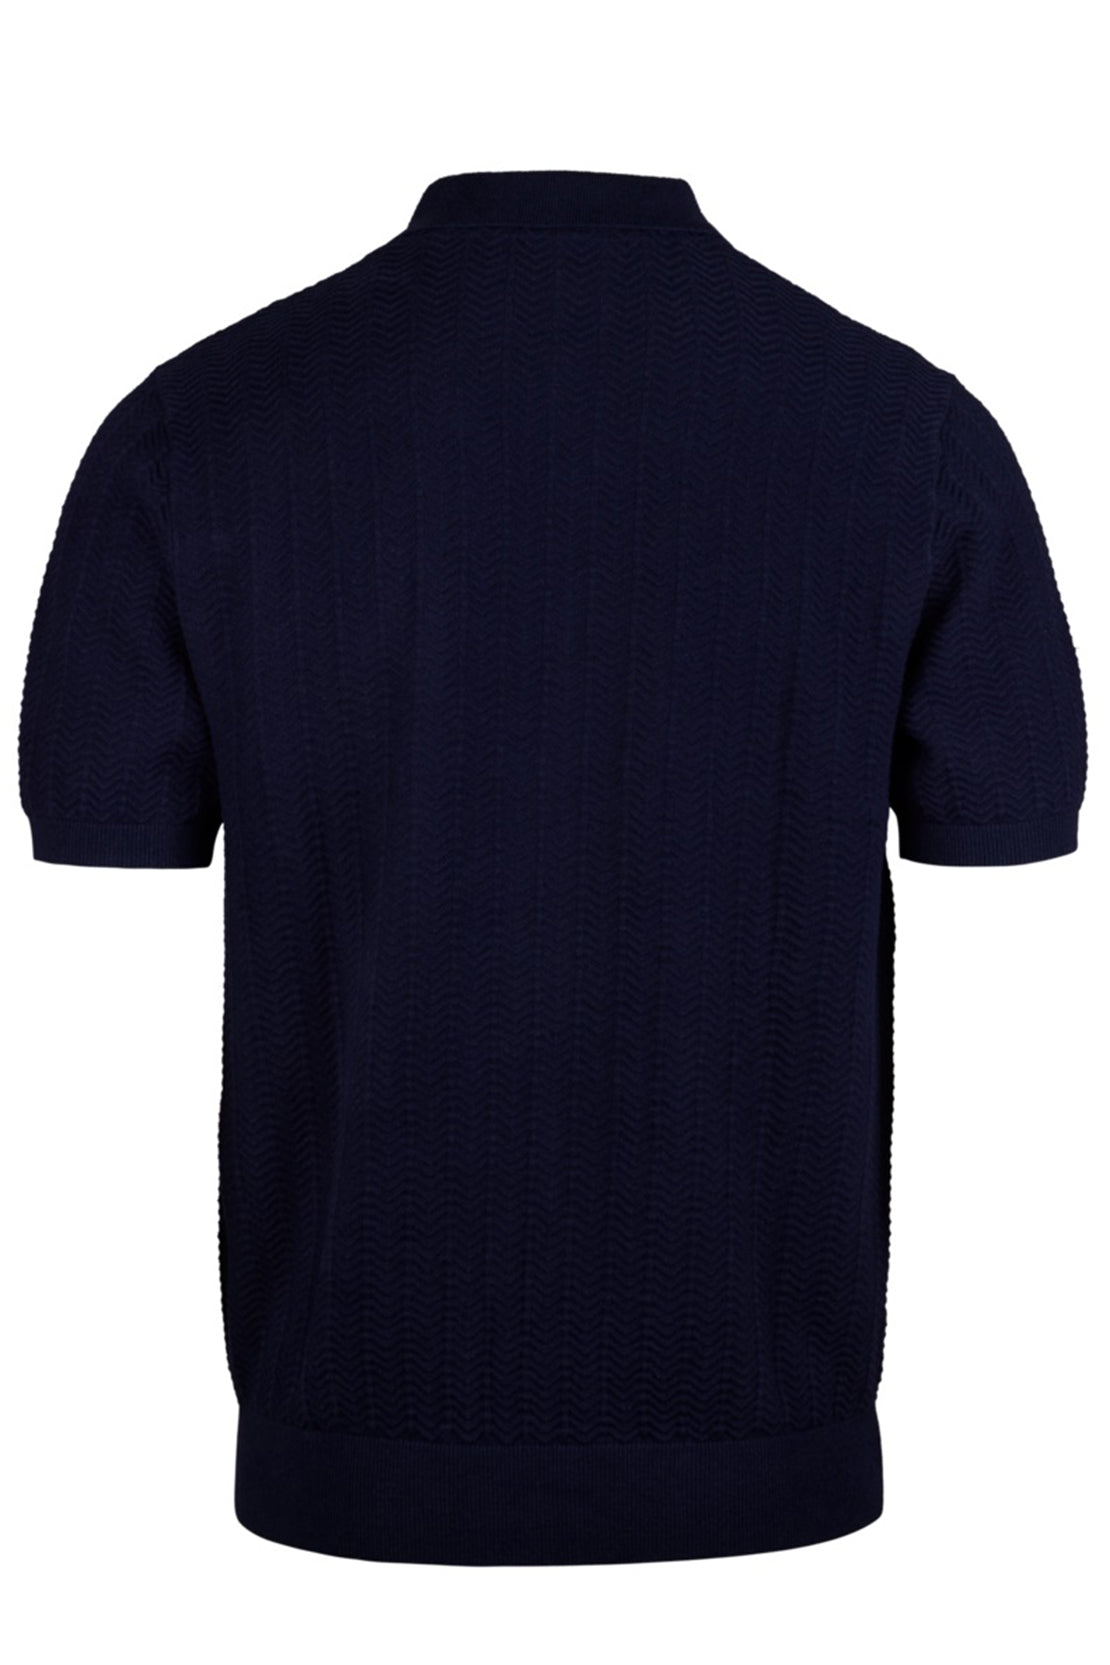 STENSTROMS - Textured Linen/Cotton Polo Shirt in Navy Blue 4202482541180